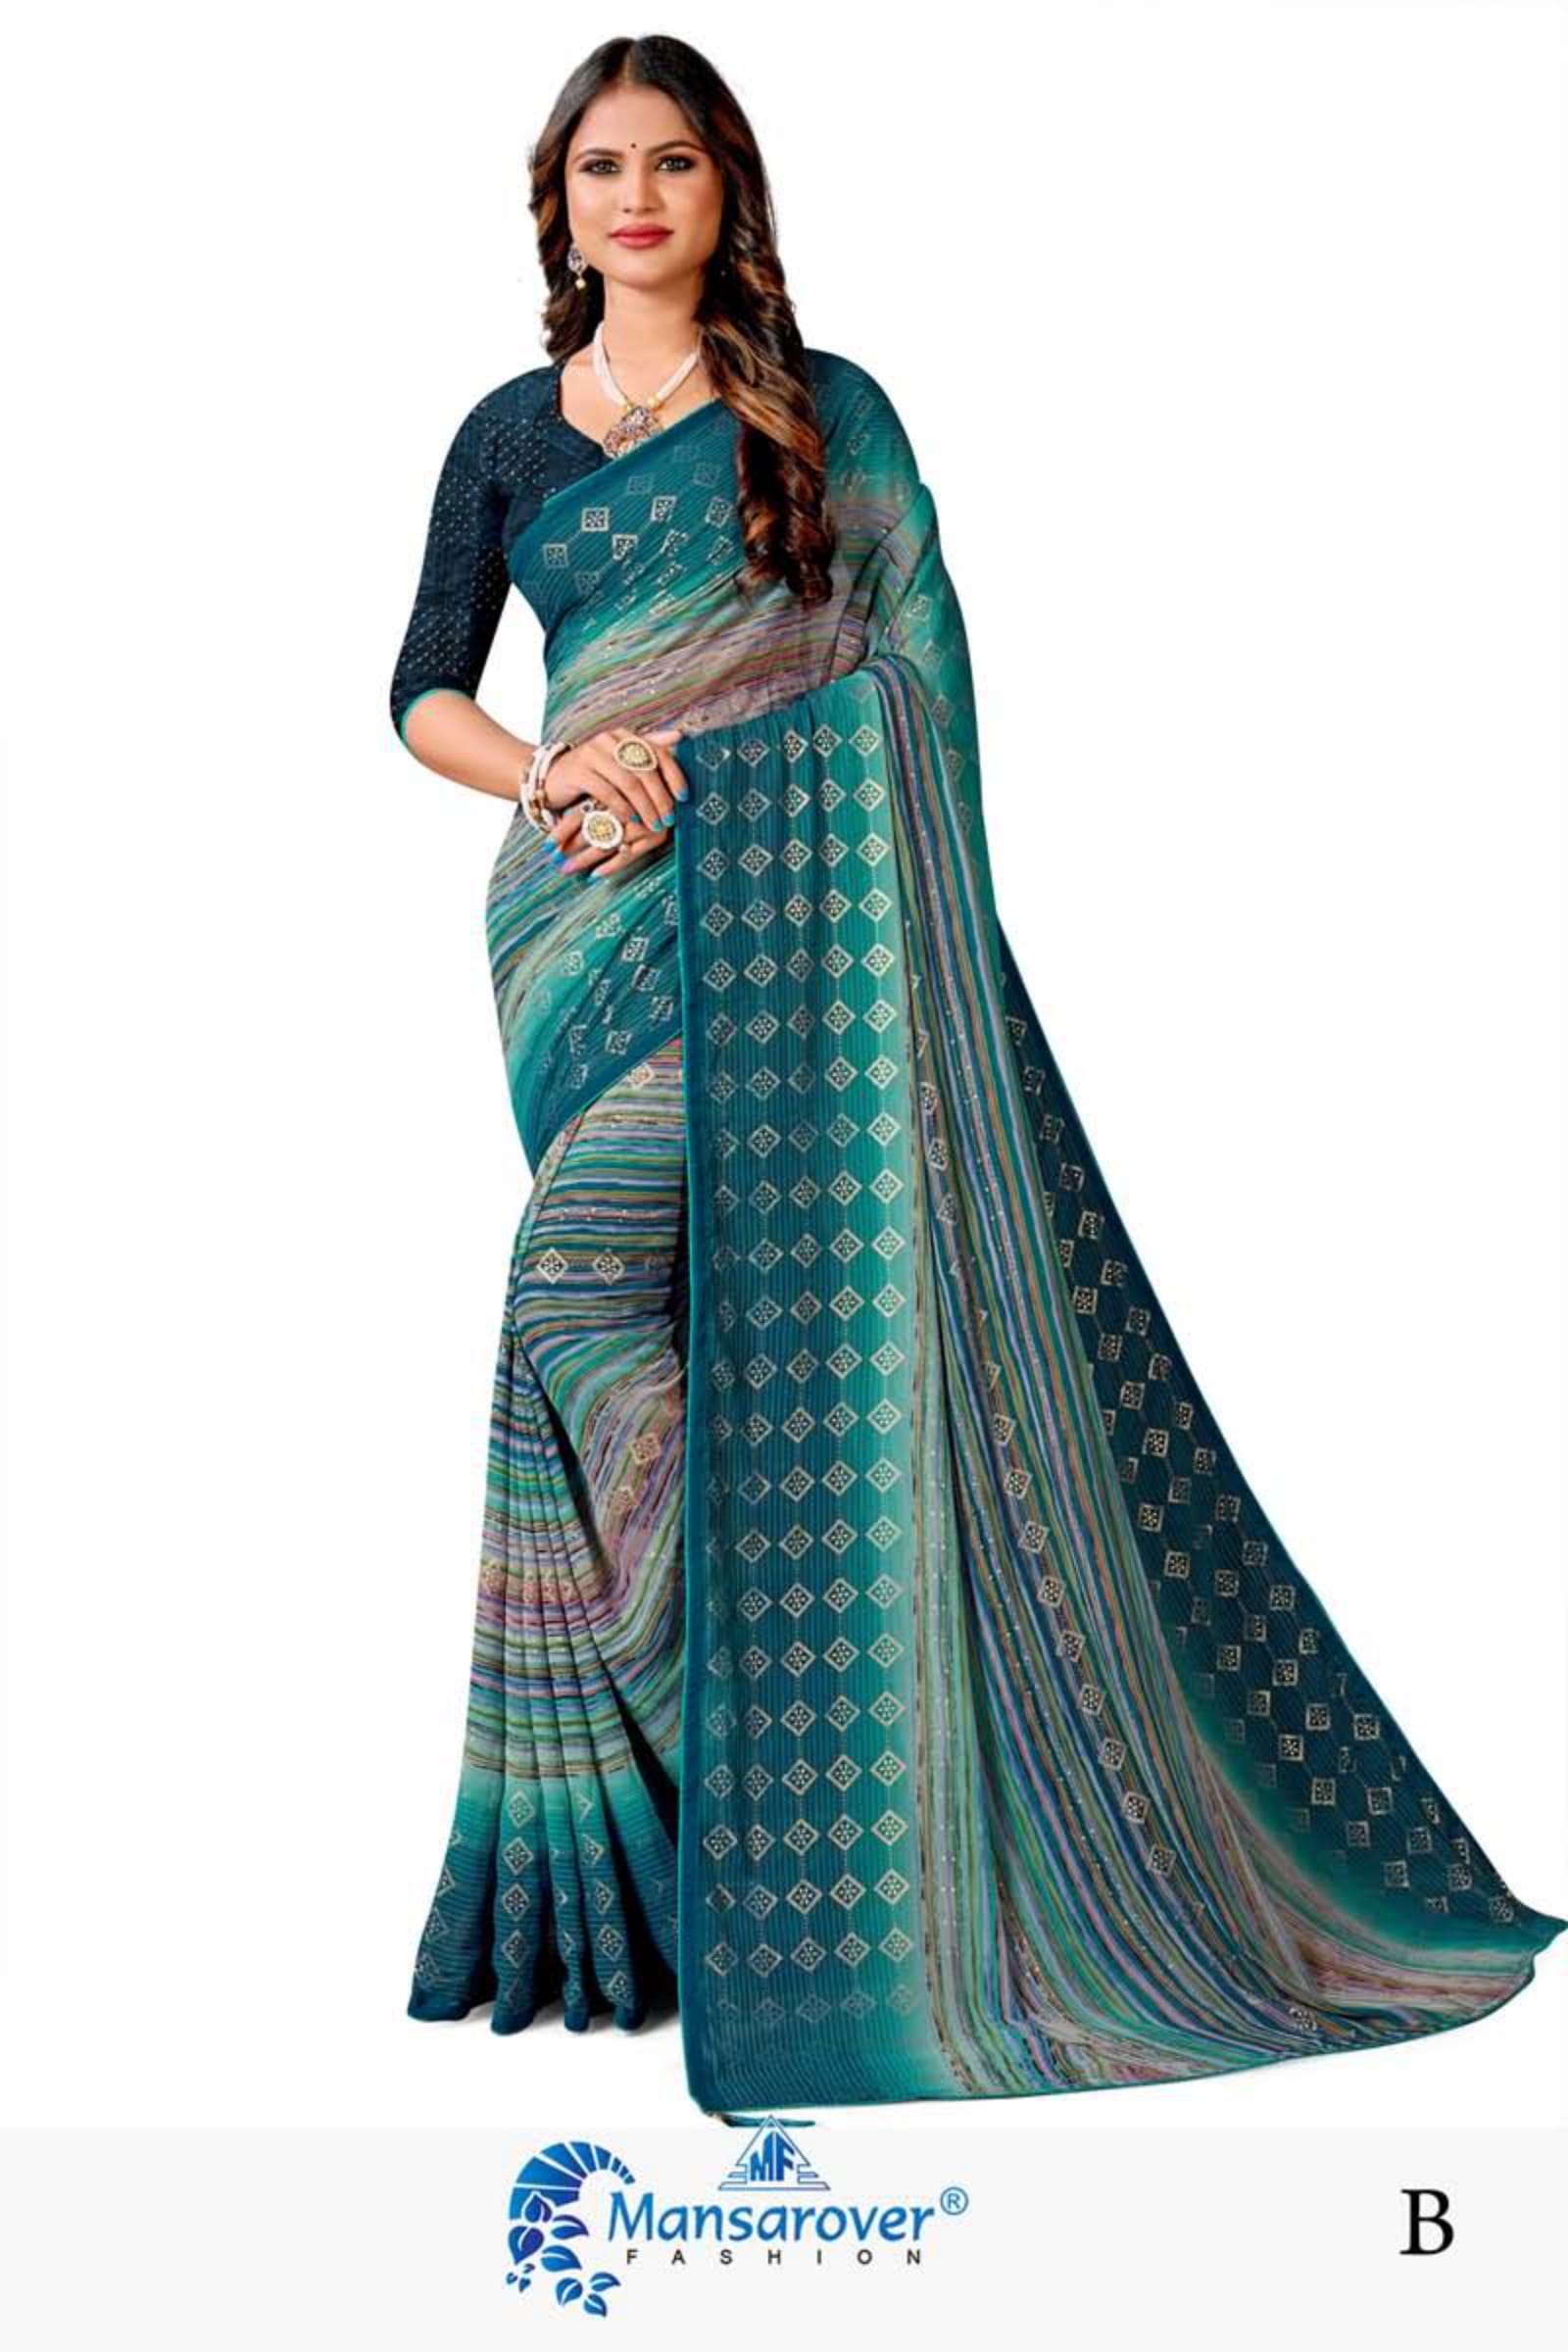 mansarover fashion kavita Wetless foil Sequence blouse with latkan saree